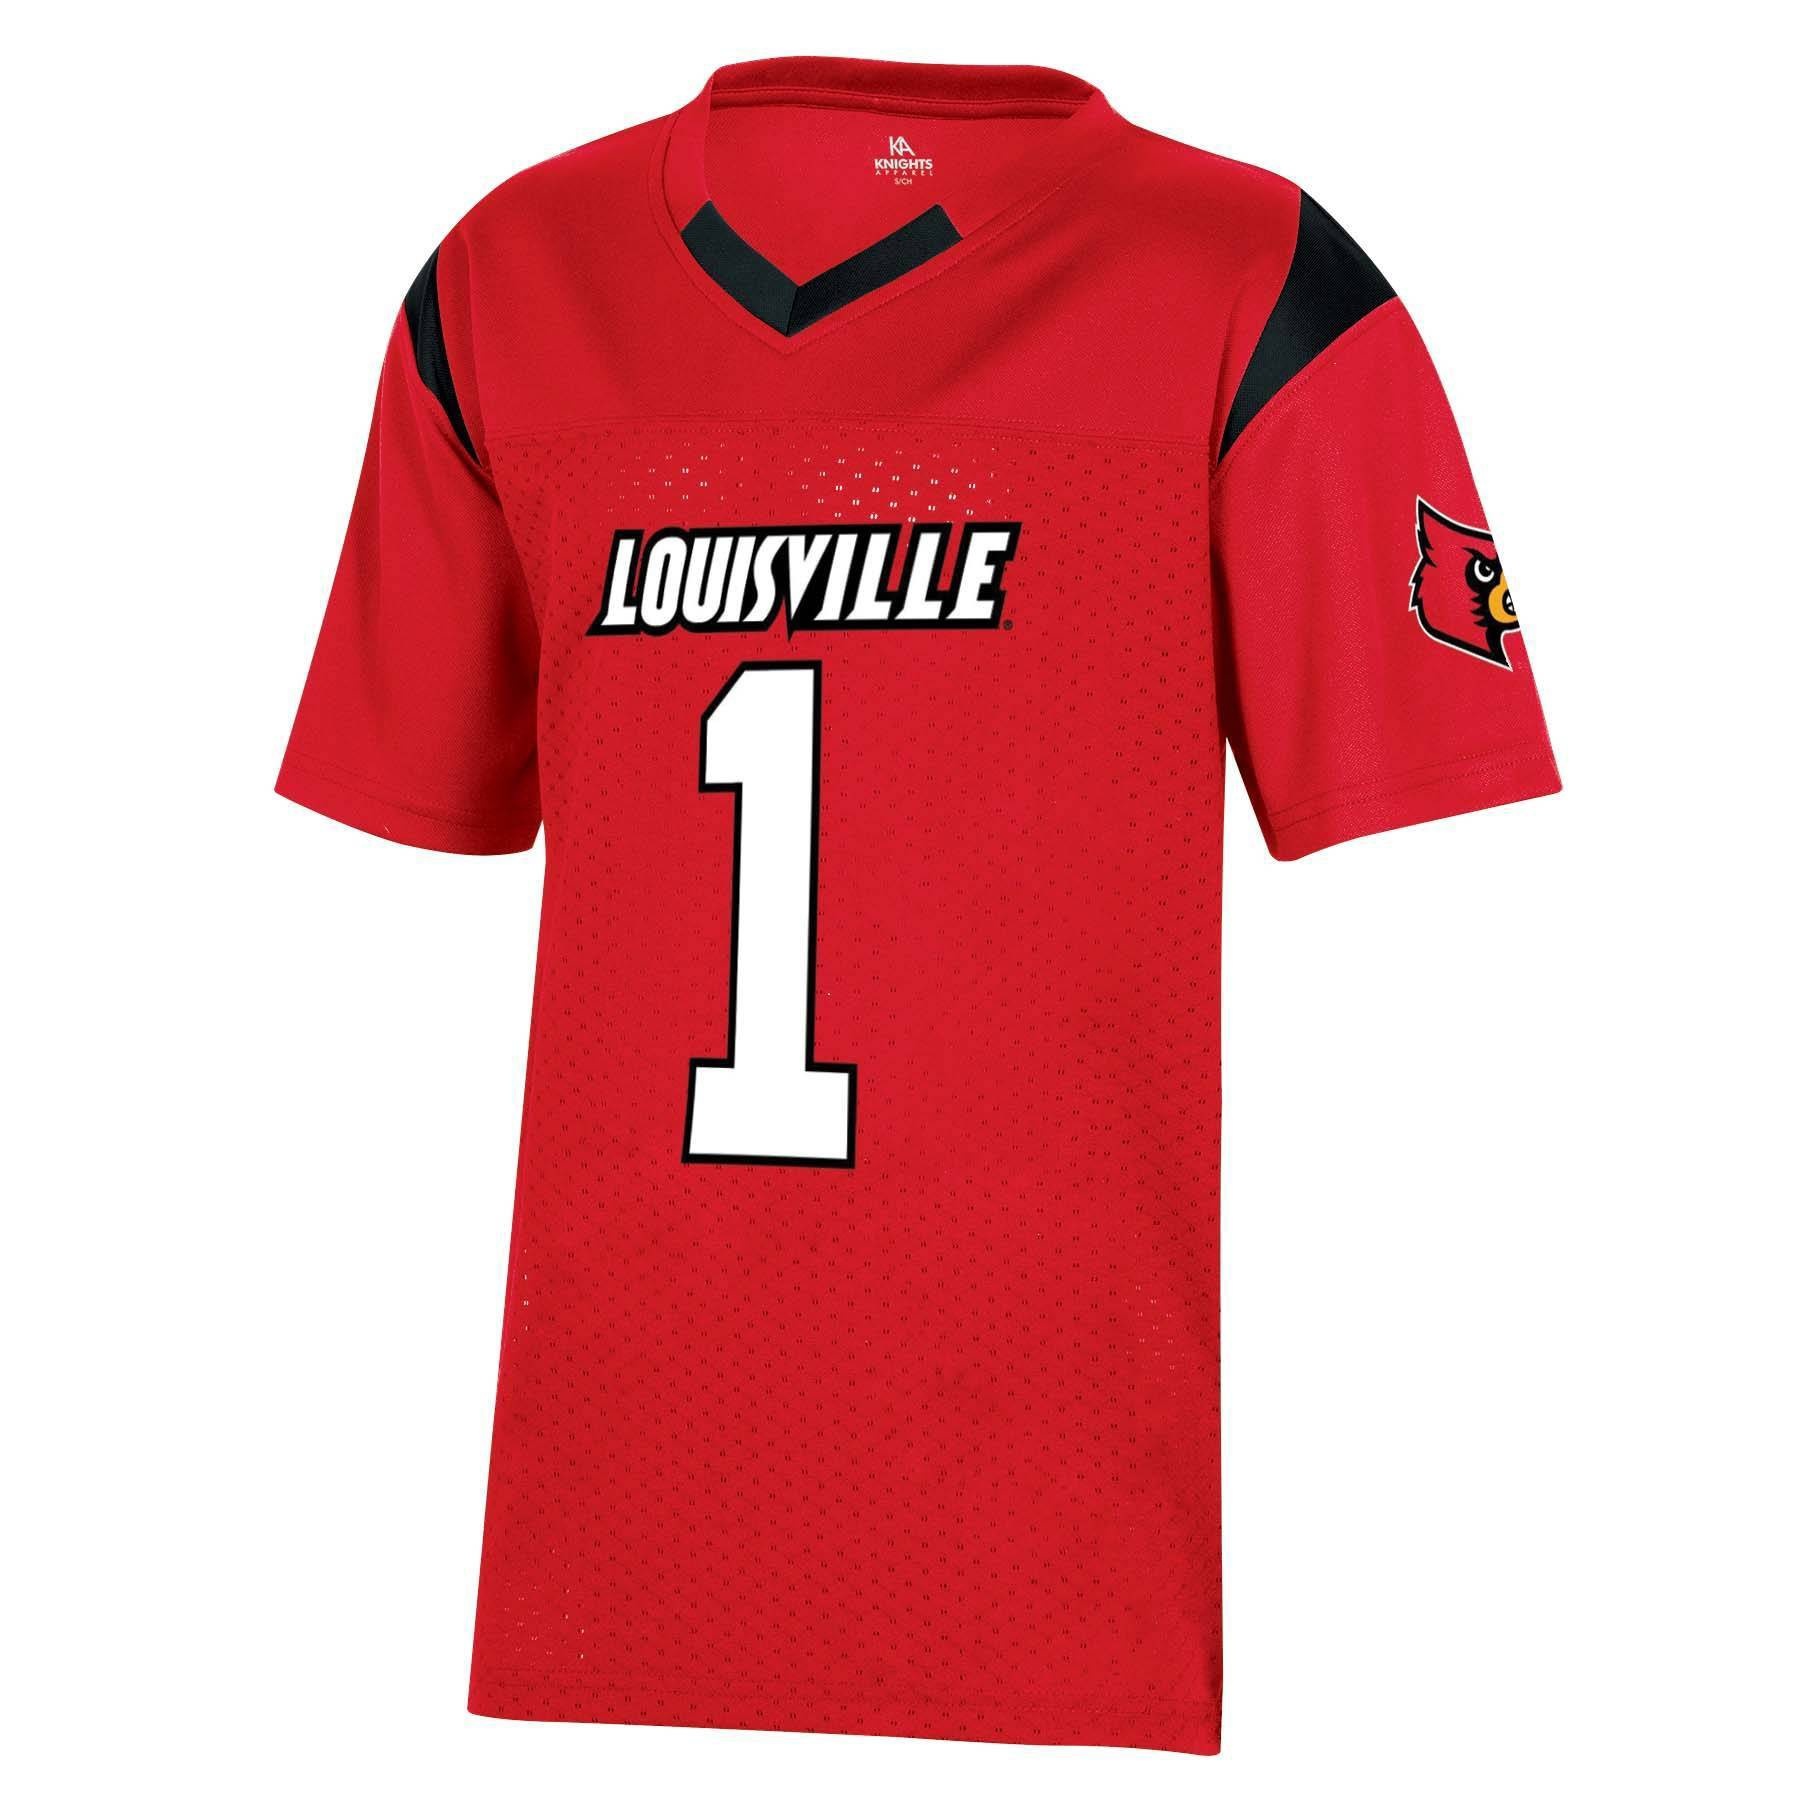 NCAA Louisville Cardinals Boys' Short Sleeve Jersey - Xs